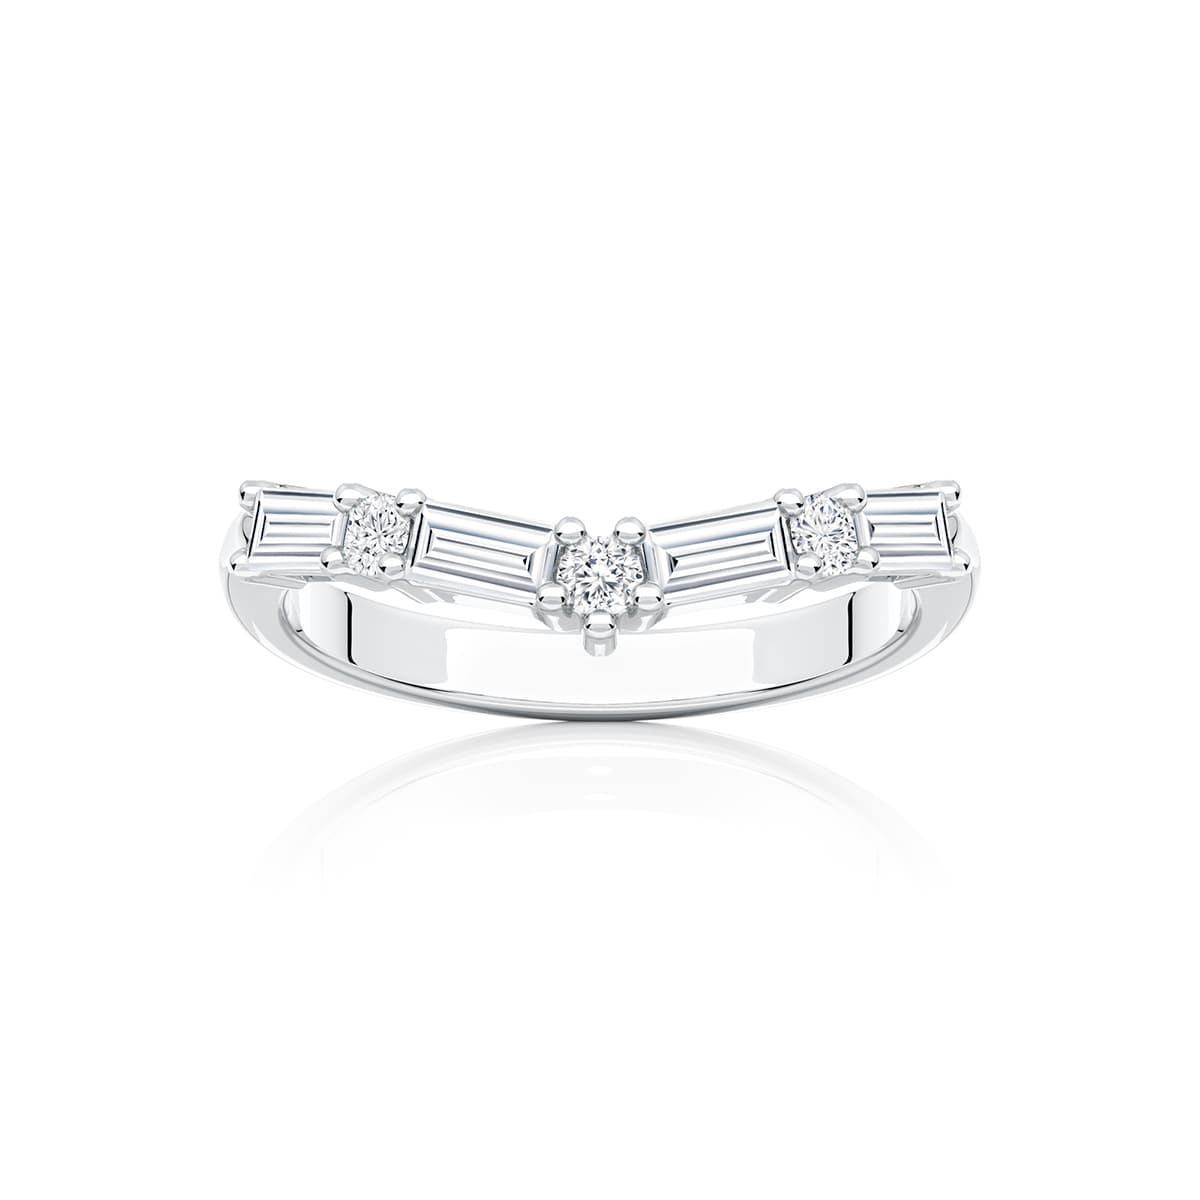 Esplanade Diamond Contoured Wedding Ring in White Gold